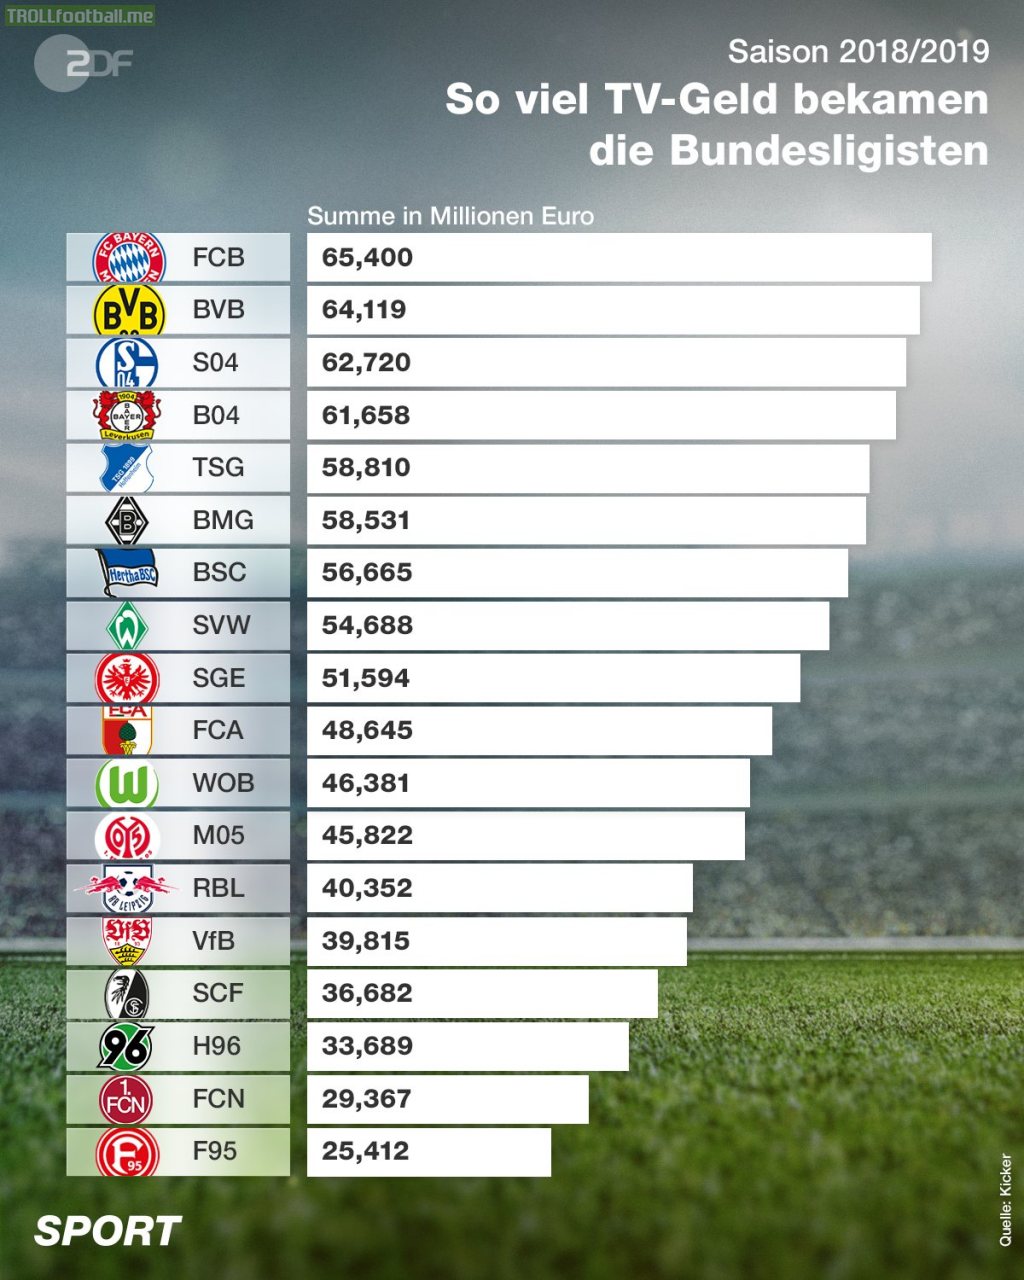 TV money distribution among Bundesliga clubs for the season 18/19 (in millions)